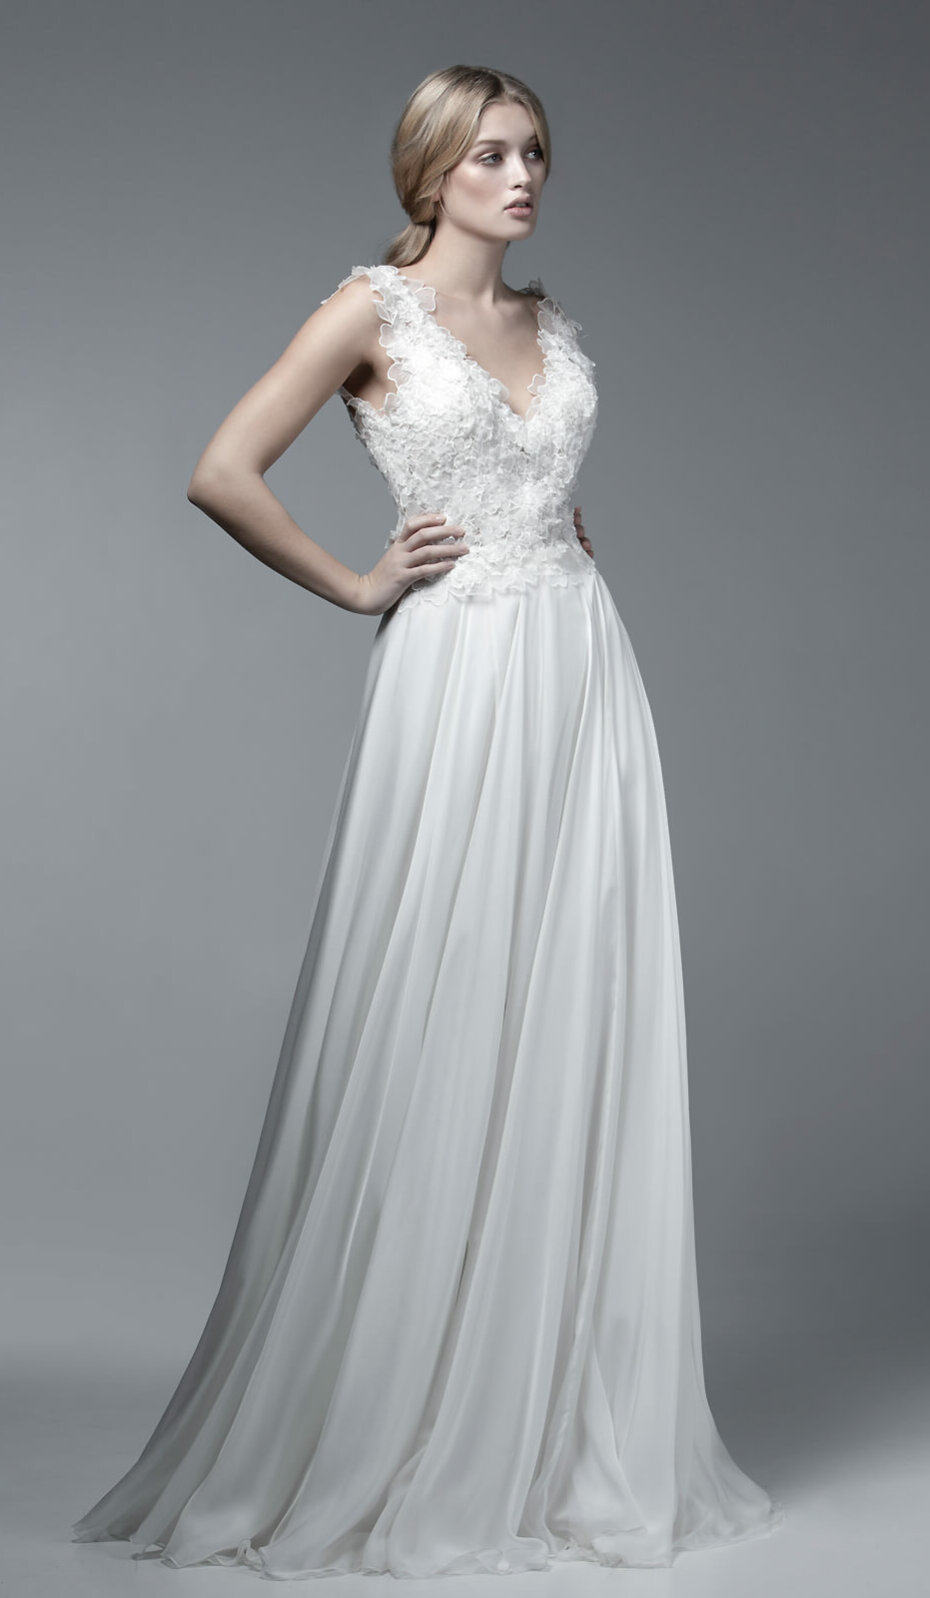 couture stuen angelika dluzen bridal skirt collection brude nederdele